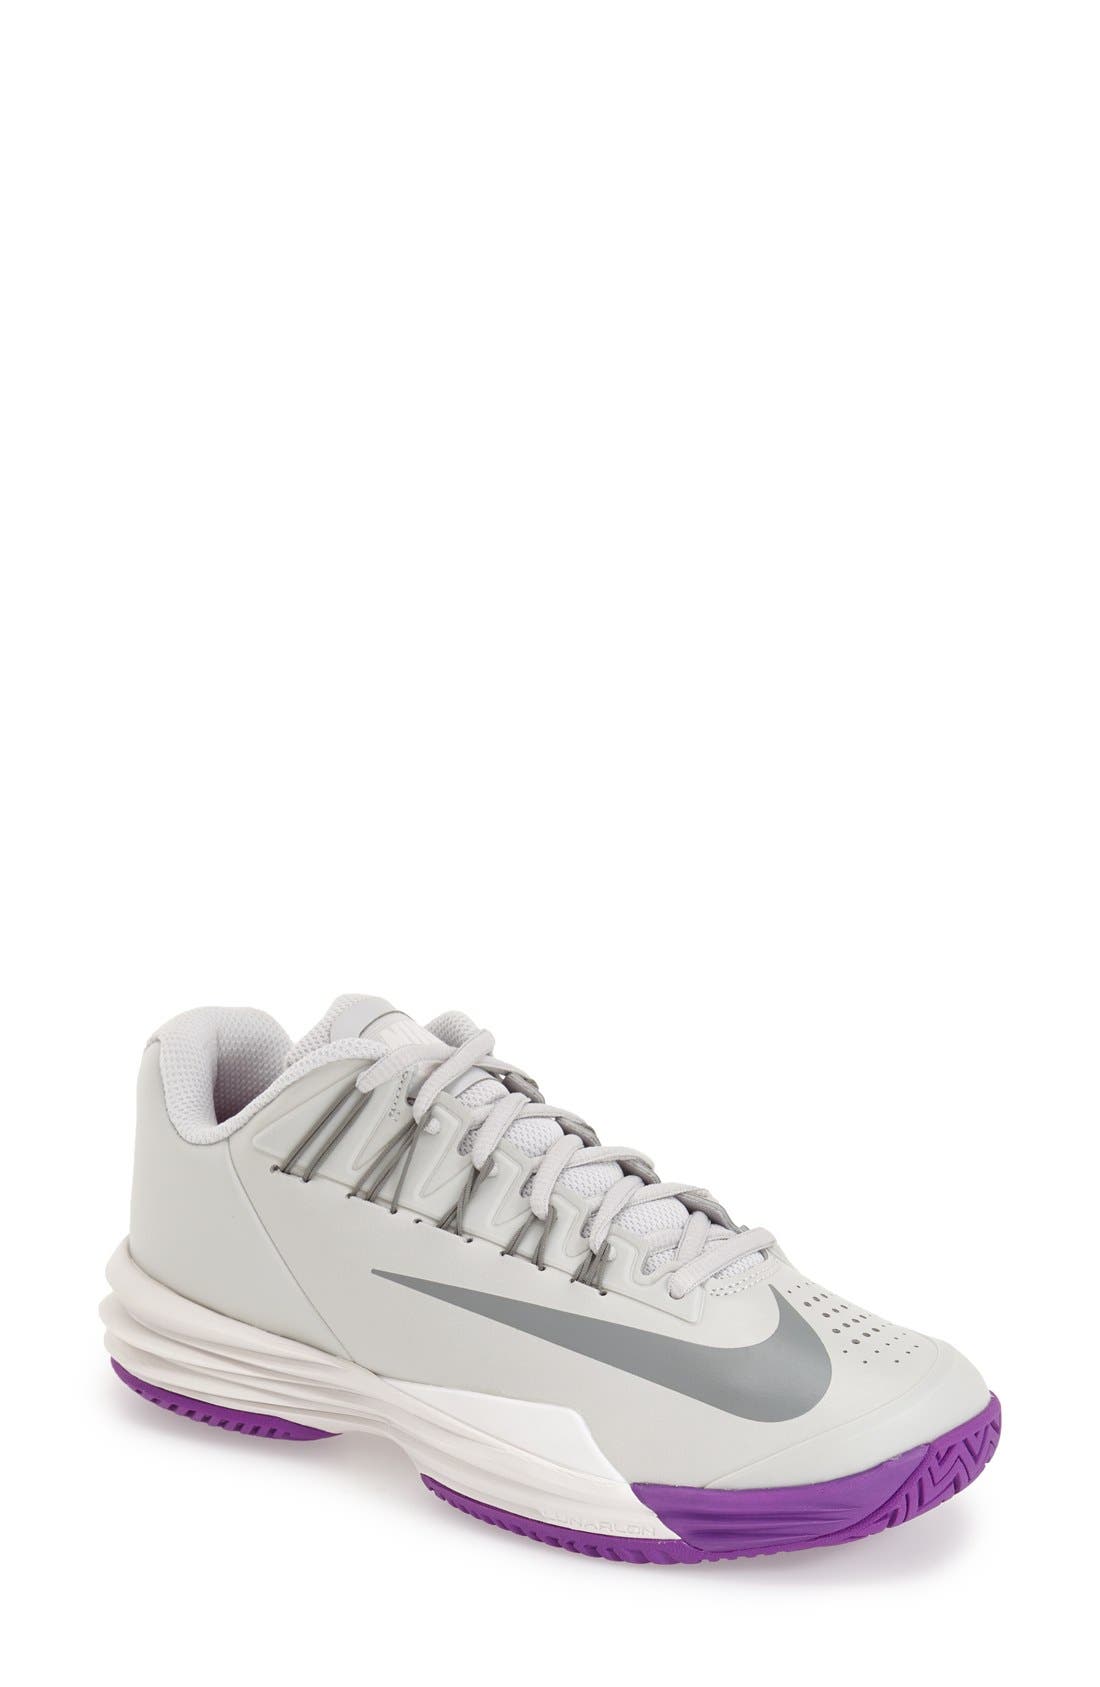 Nike 'Lunar Ballistec 1.5' Tennis Shoe 